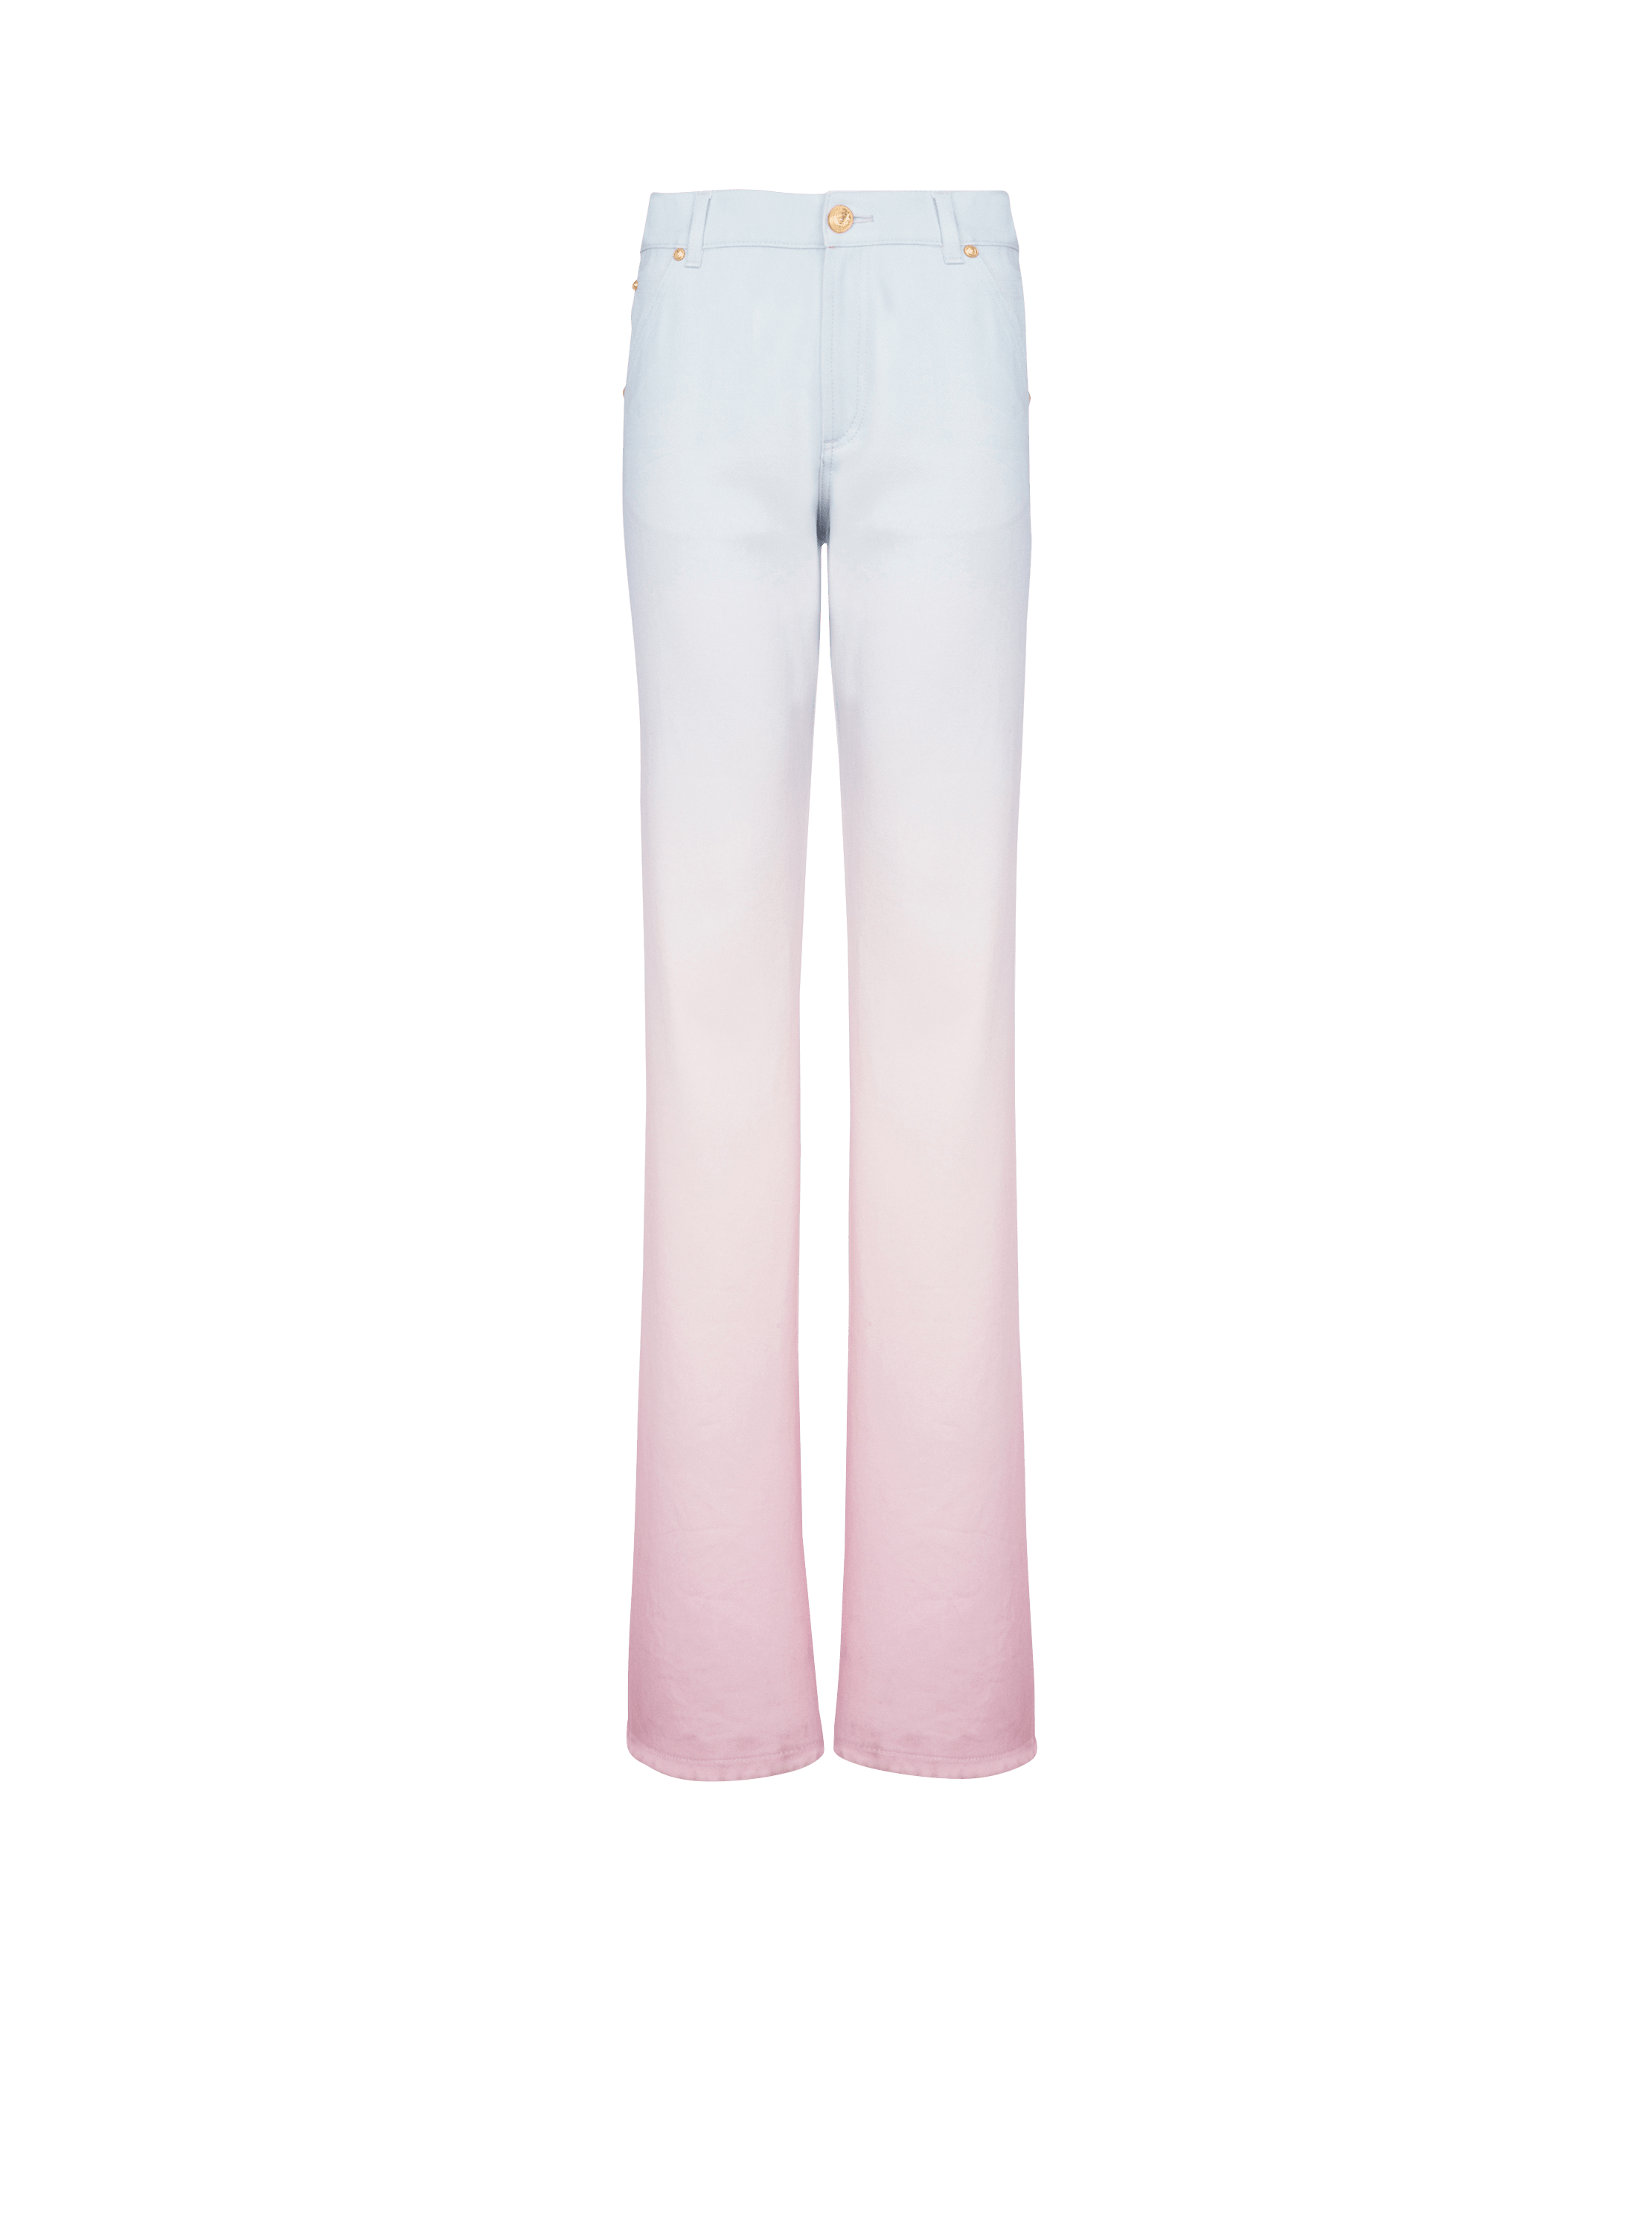 Balmain x Evian - Jean large , multicolore, hi-res